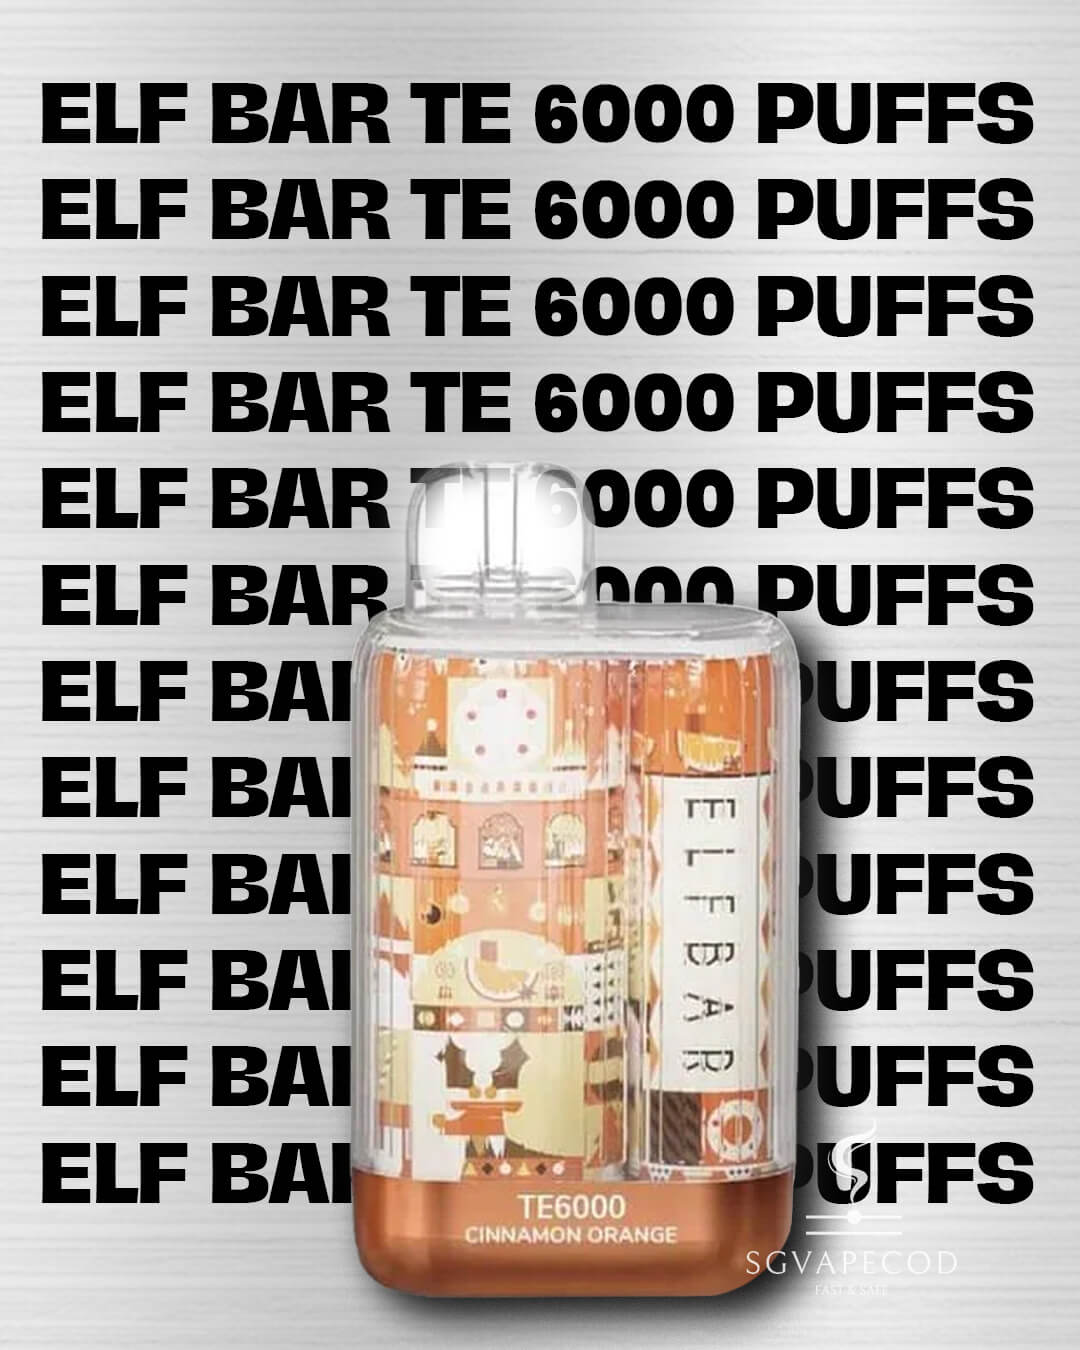 Elf-Bar-TE-6000-(SG VAPE COD)